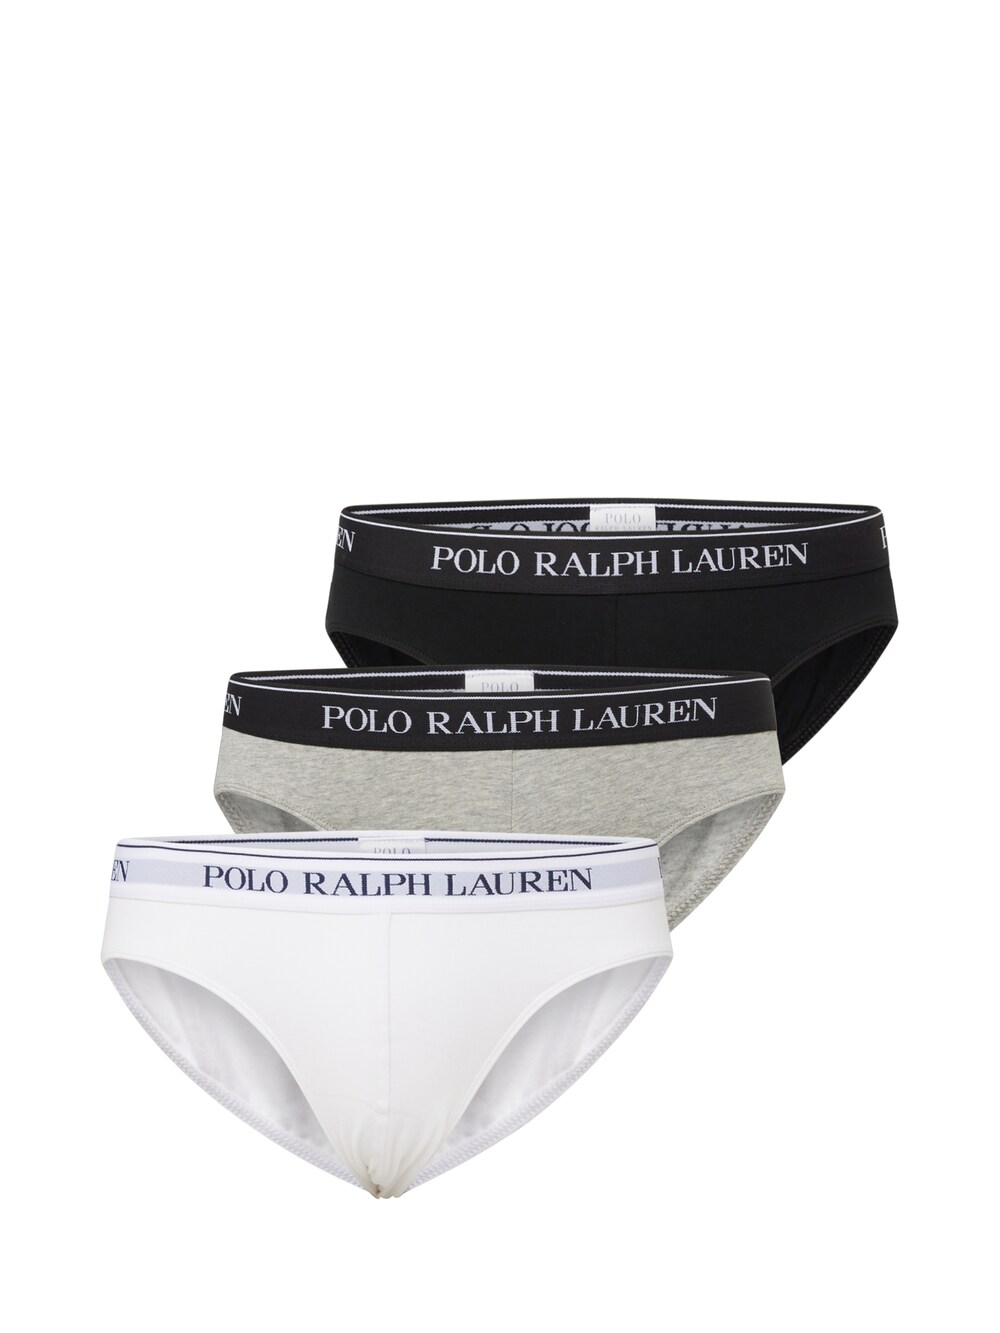 Трусики Polo Ralph Lauren, серый/пестрый серый/черный/белый